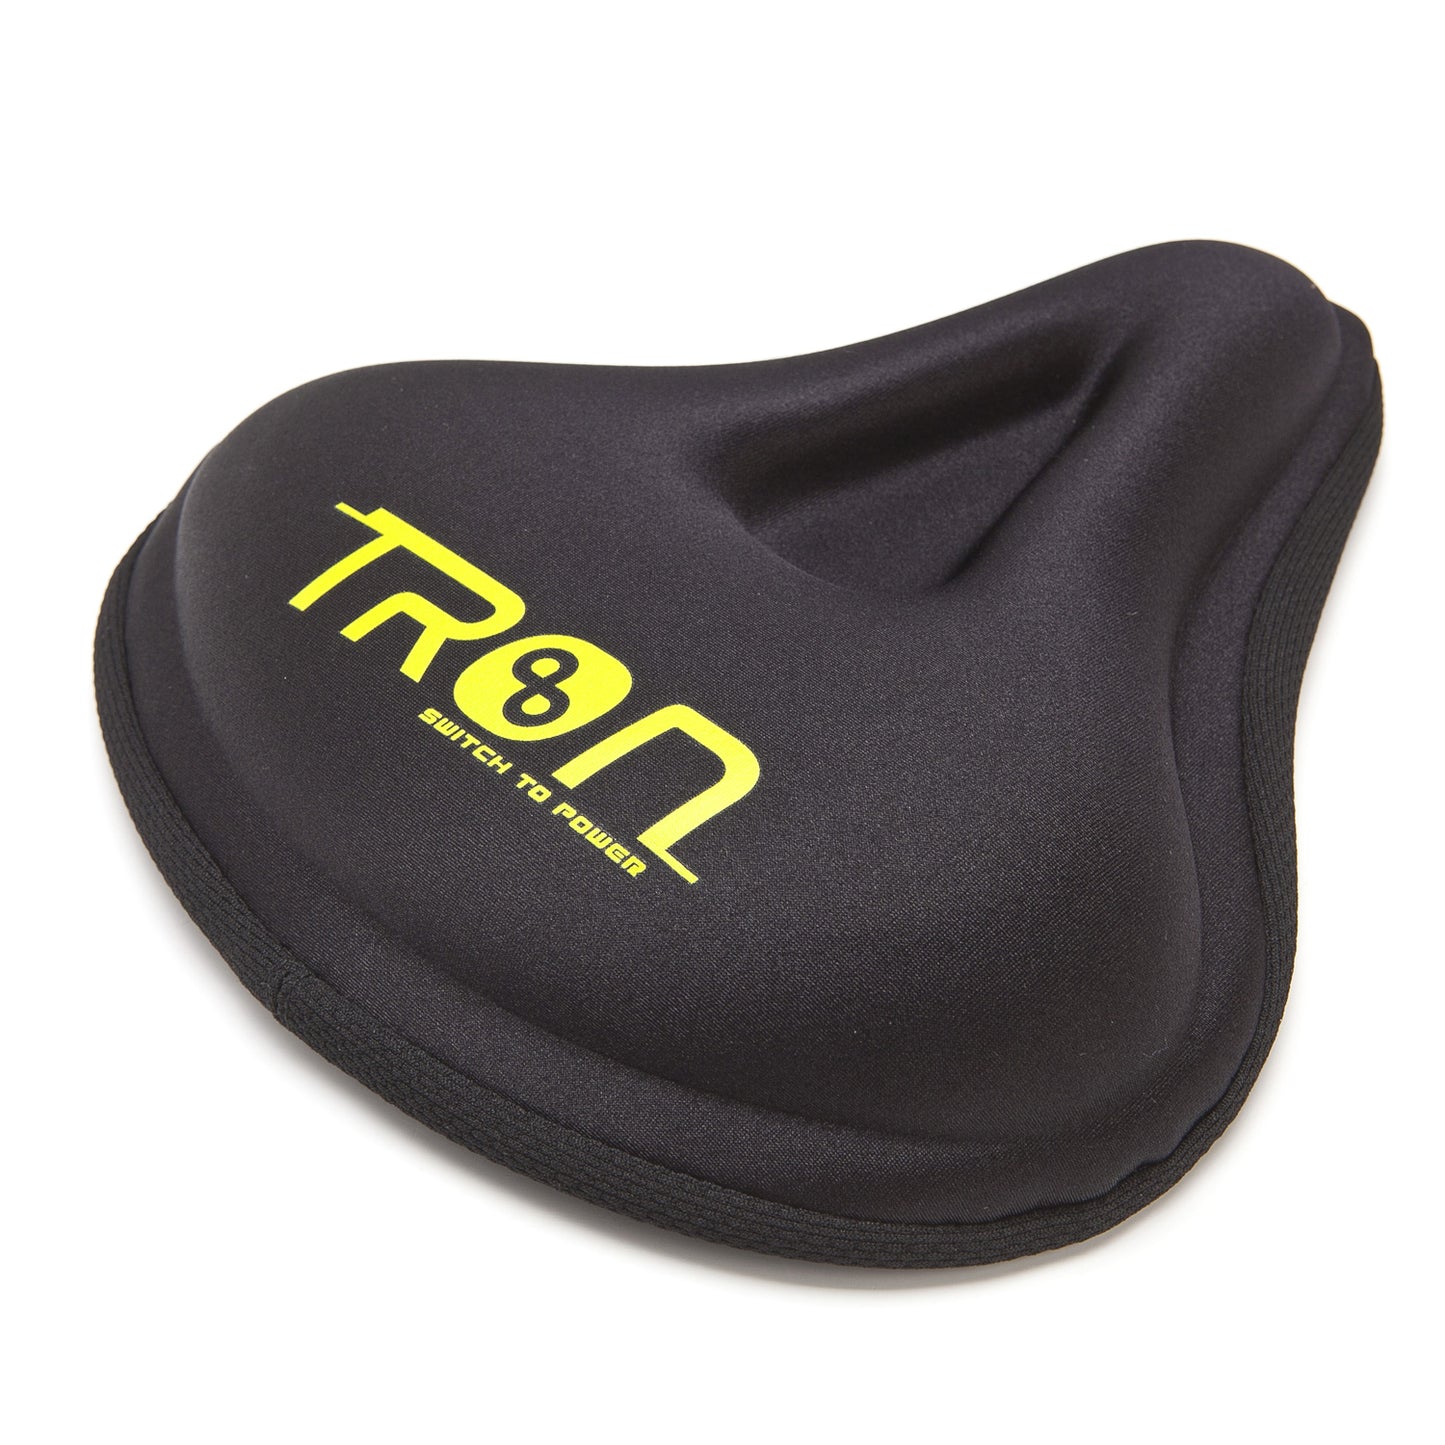 TRON Velo Premium Gel Saddle Cover